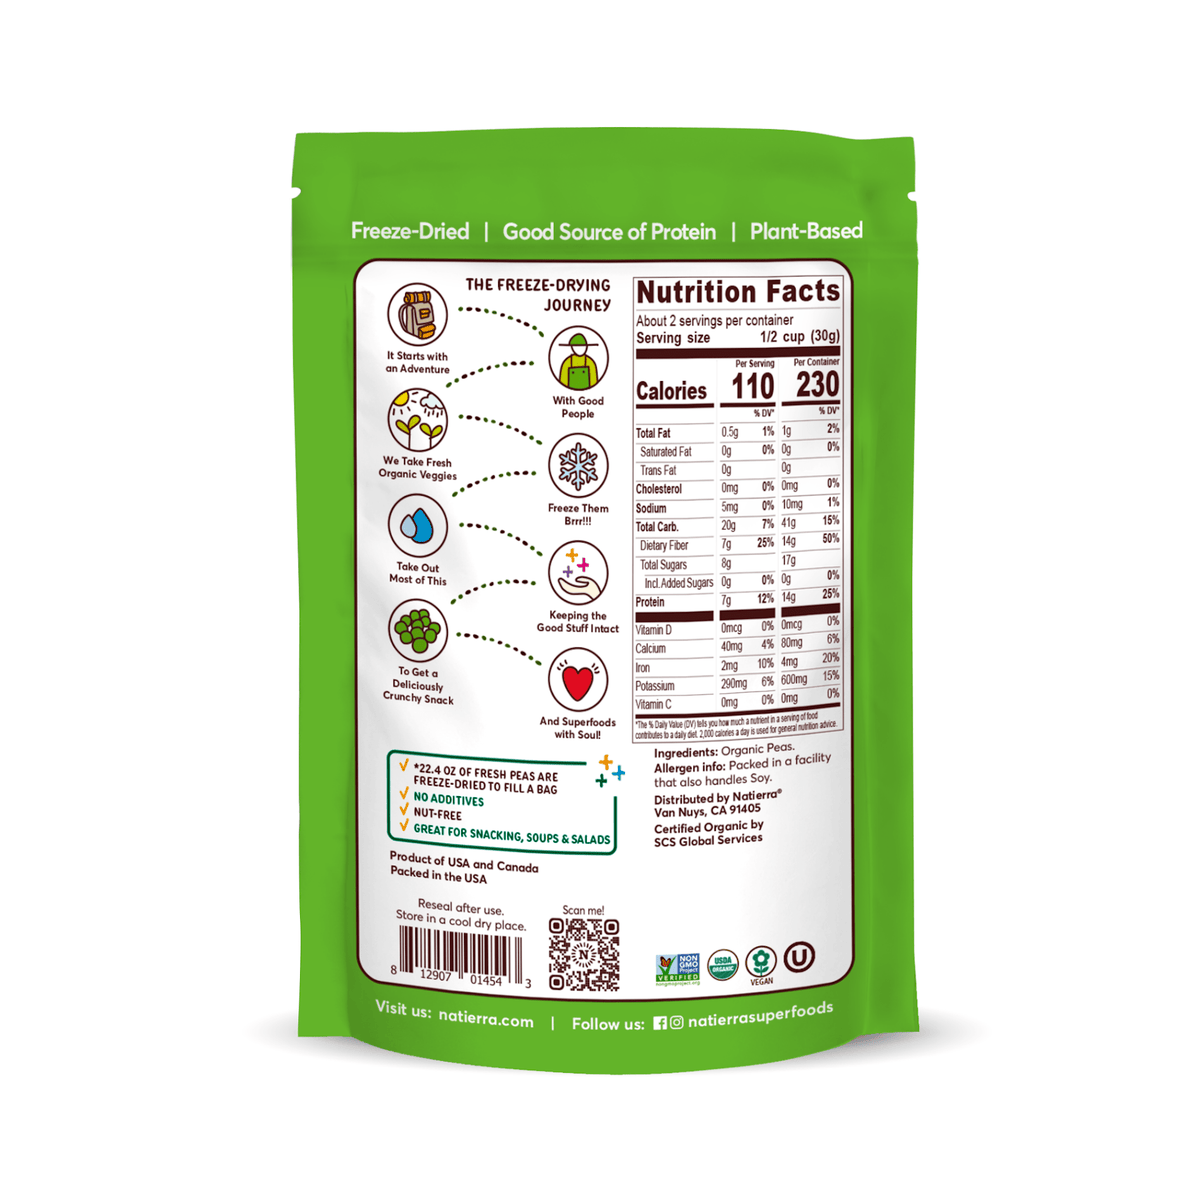 Natierra Organic Freeze-Dried Peas nutritional facts